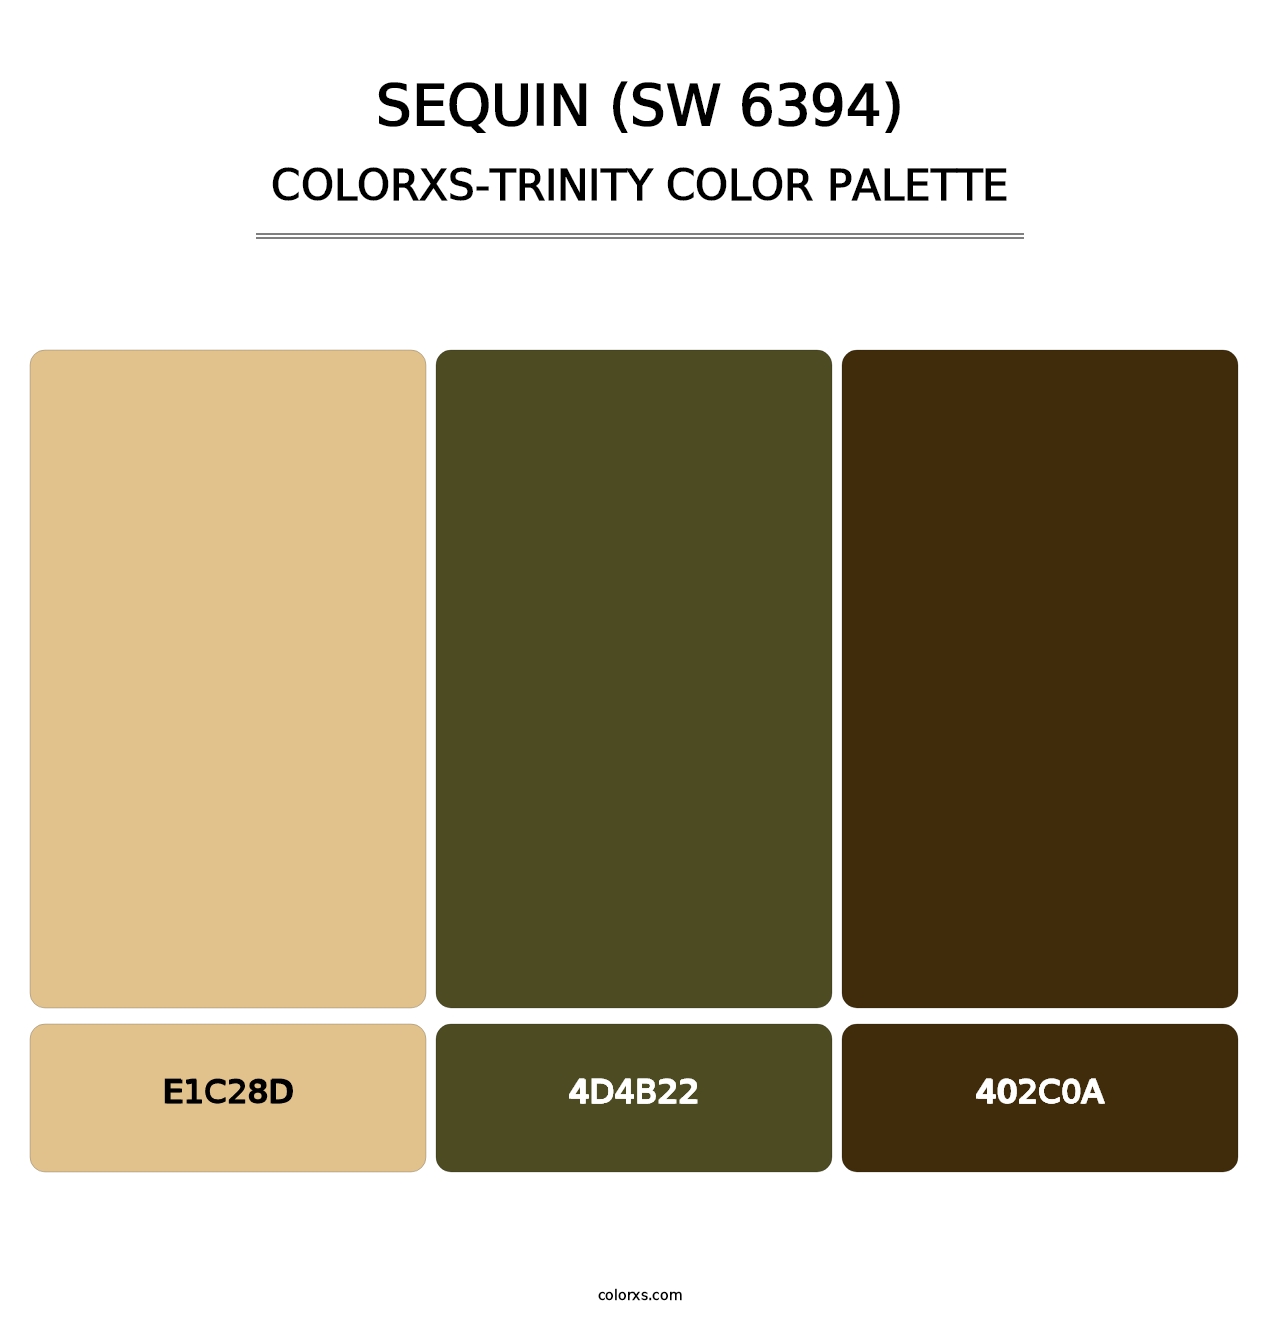 Sequin (SW 6394) - Colorxs Trinity Palette